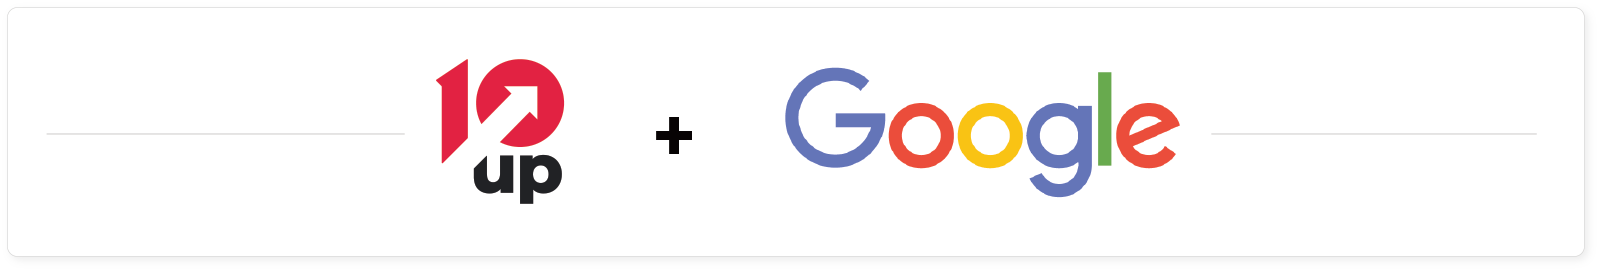 10up and Google Partnership